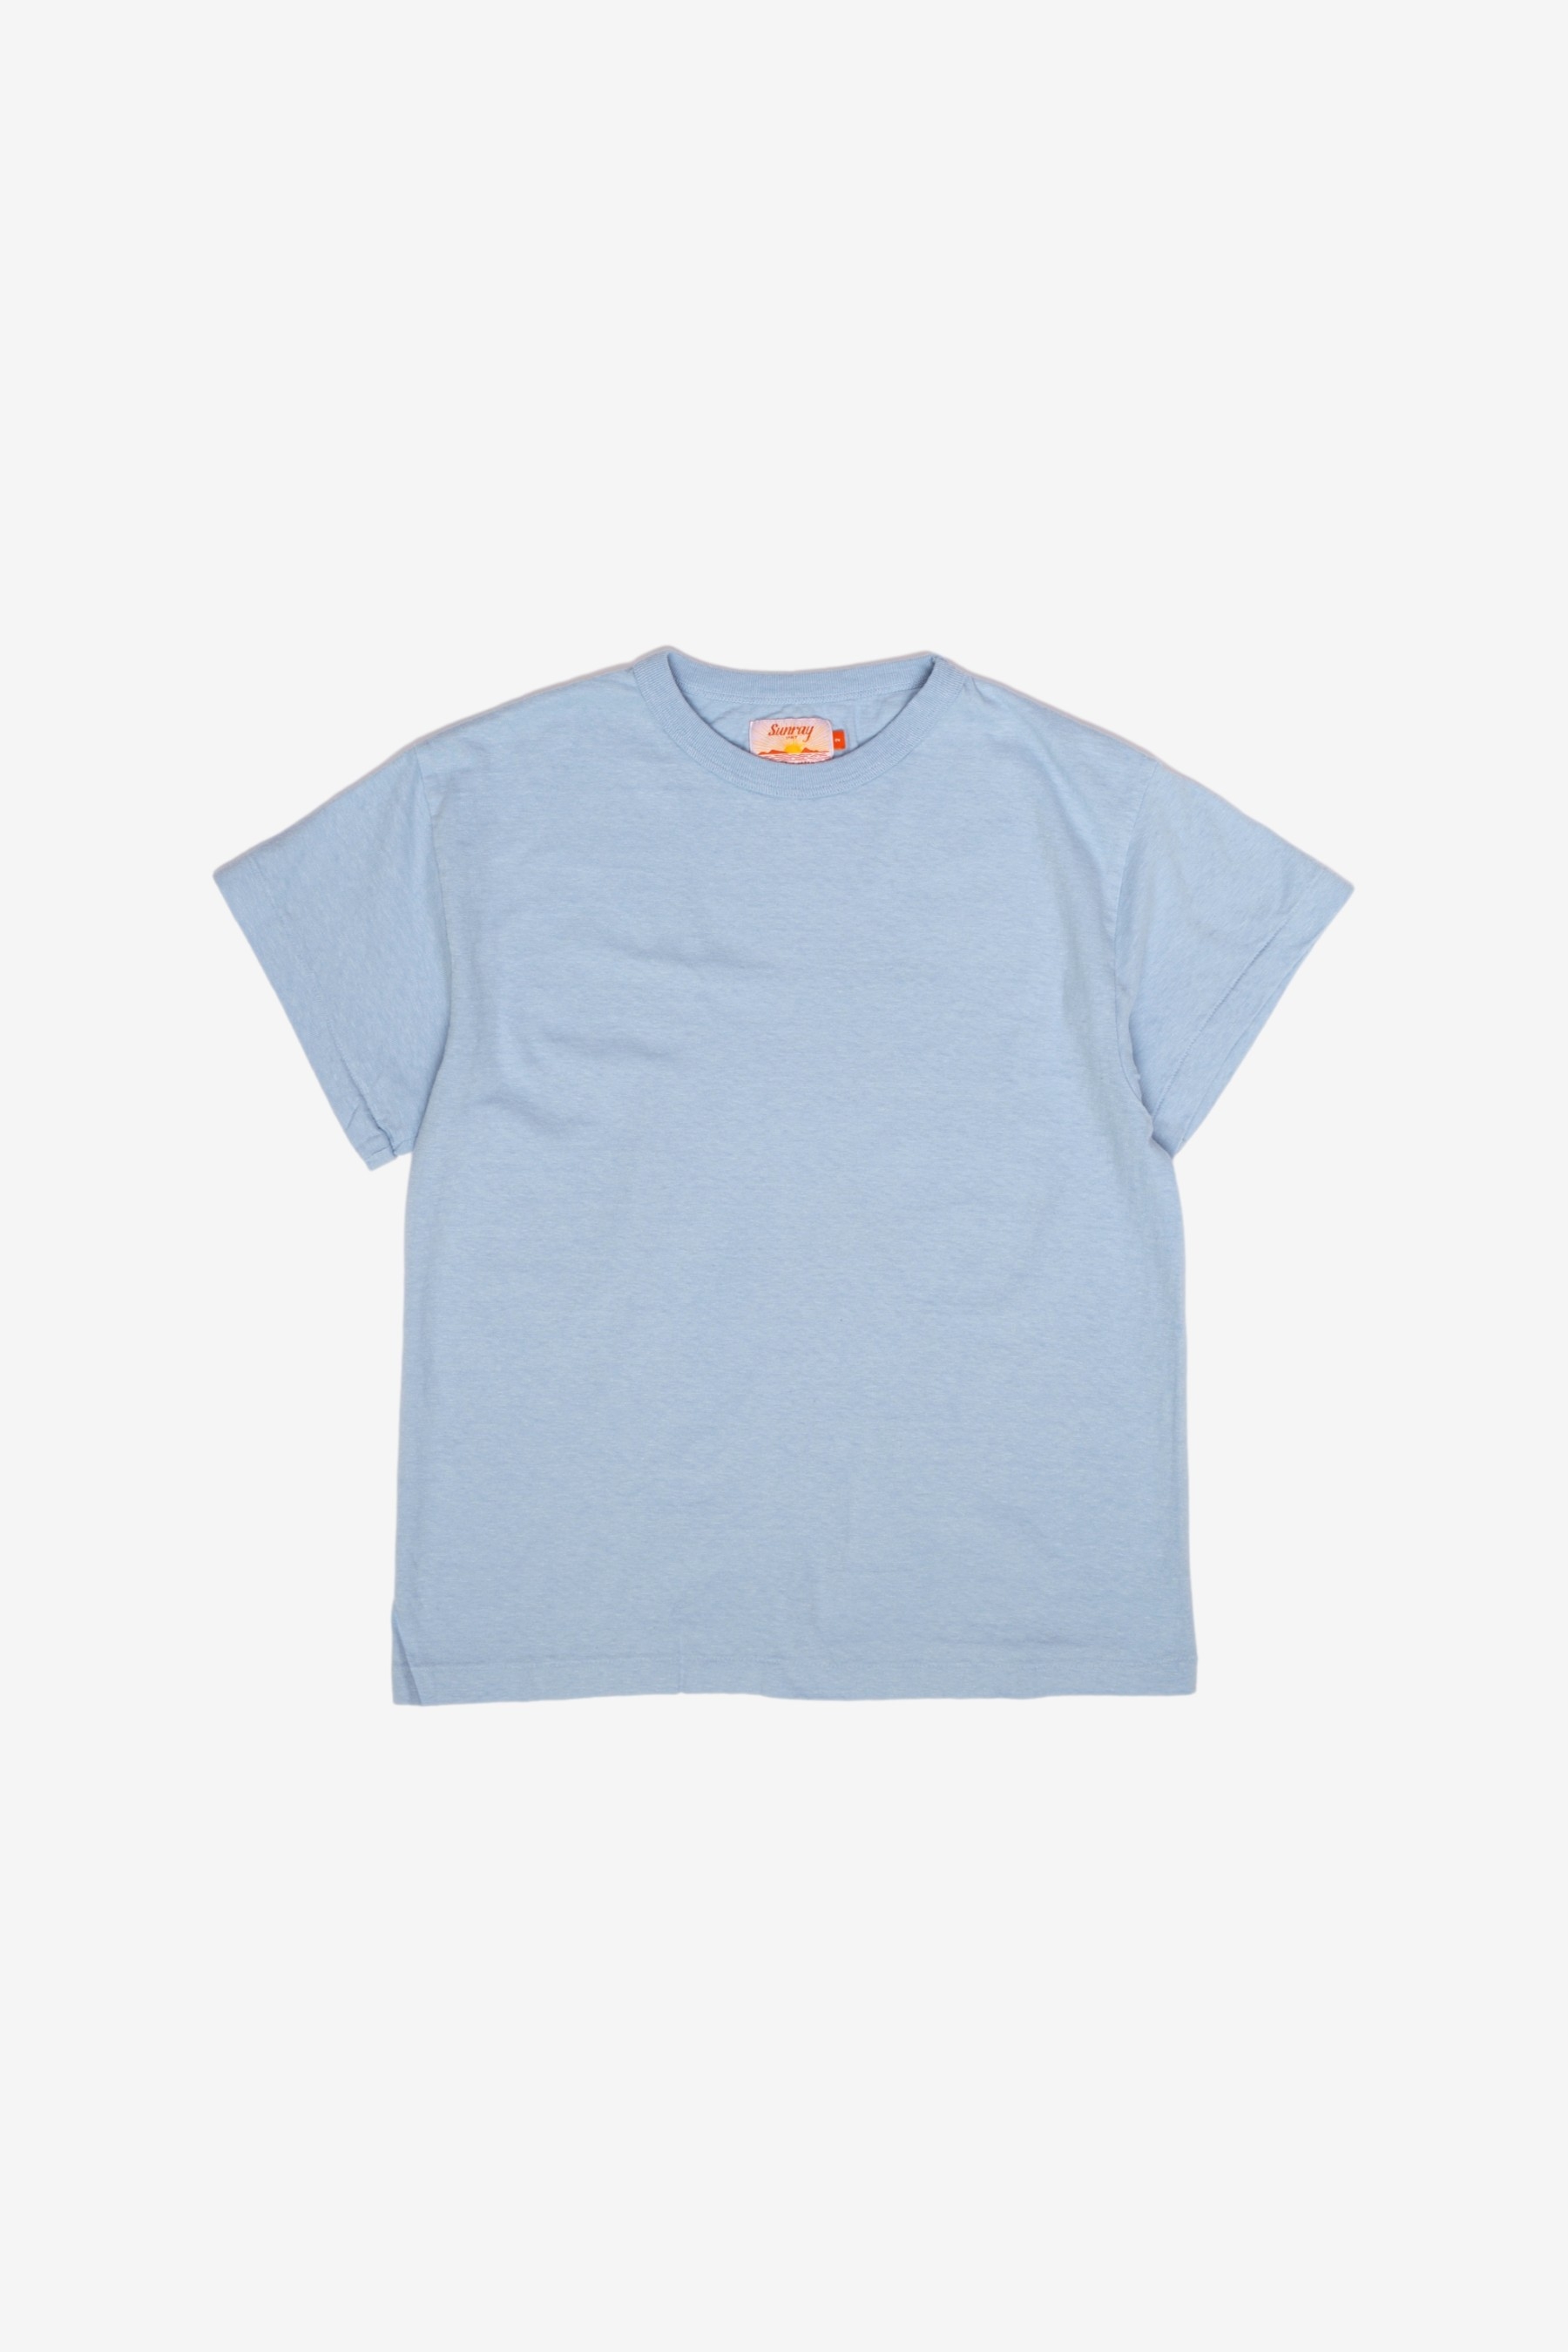 Makaha Short Sleeve T-Shirt in Dark Navy - Sunray Sportswear